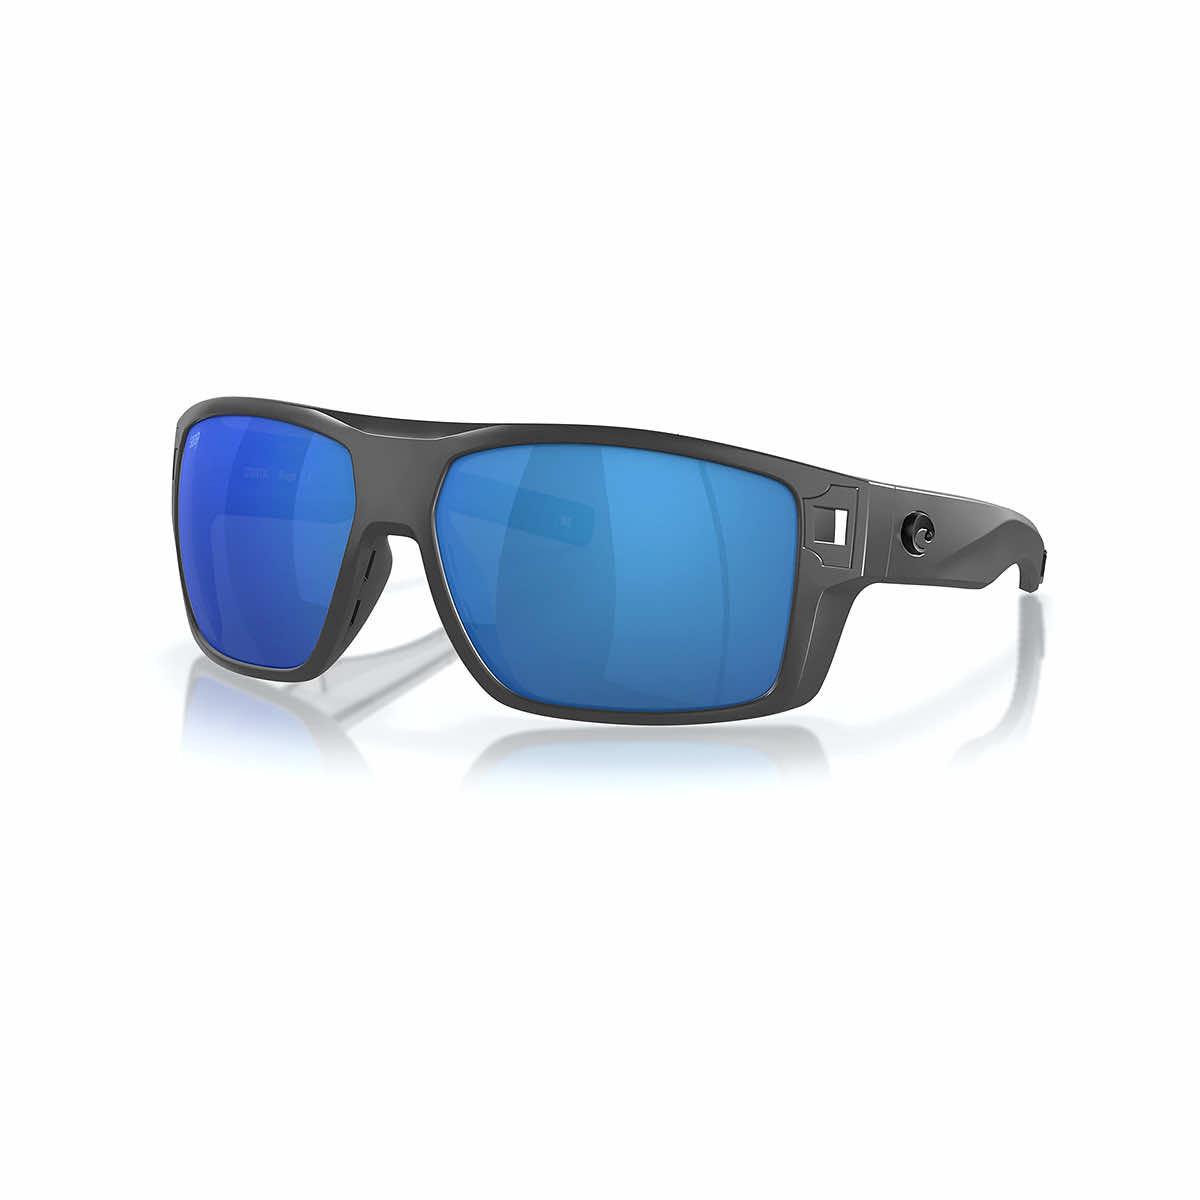  Diego 580p Sunglasses - Polarized Plastic